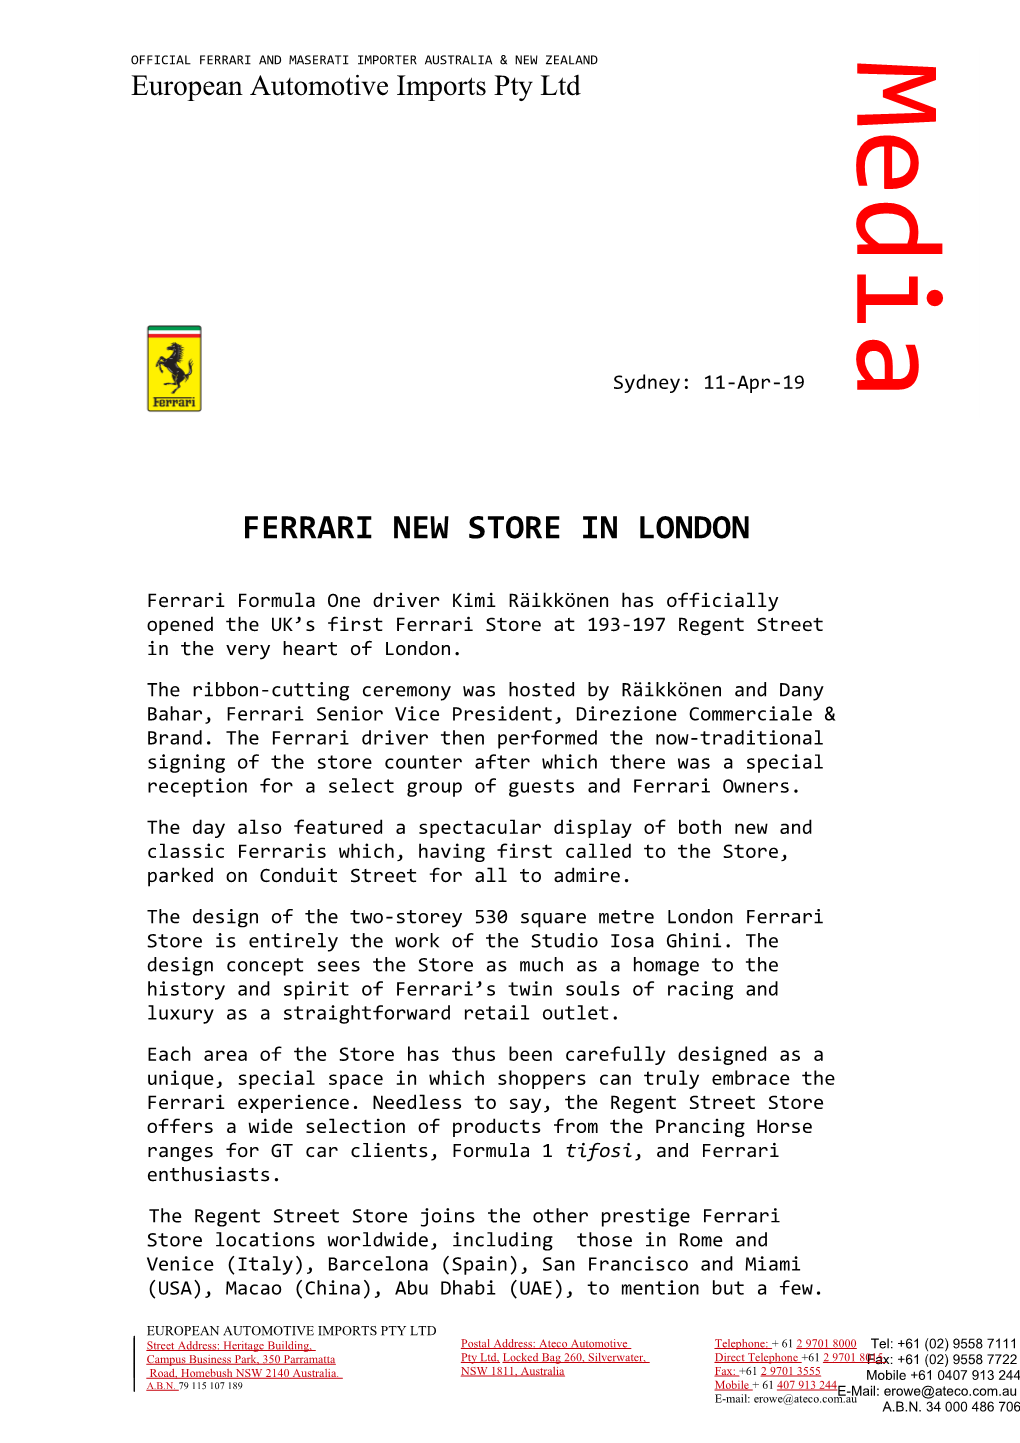 Ferrari New Store in London